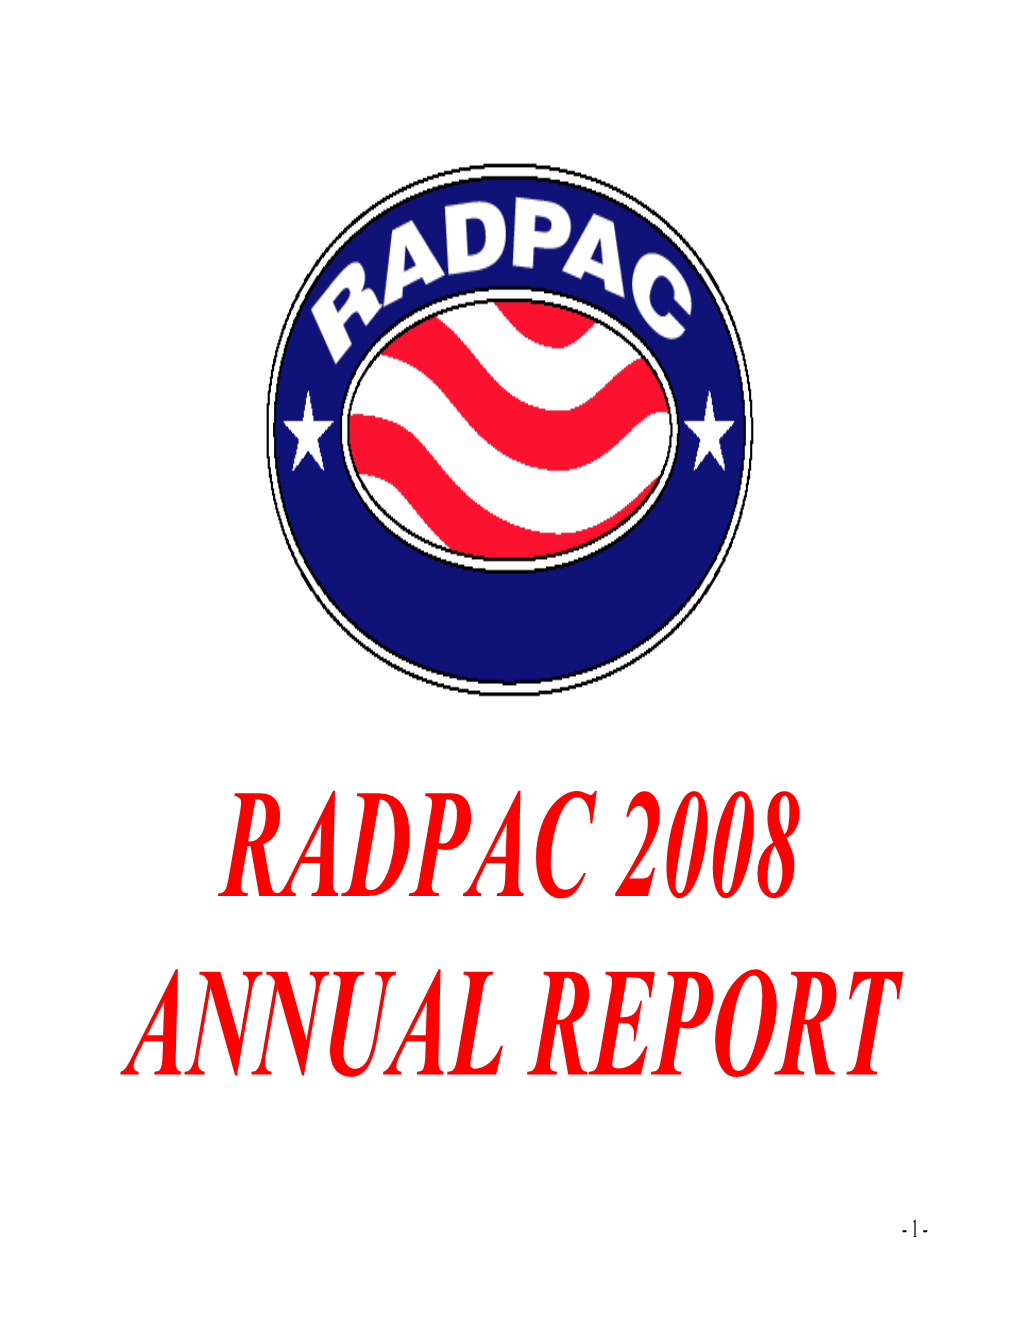 Radpac 2008 Annual Report